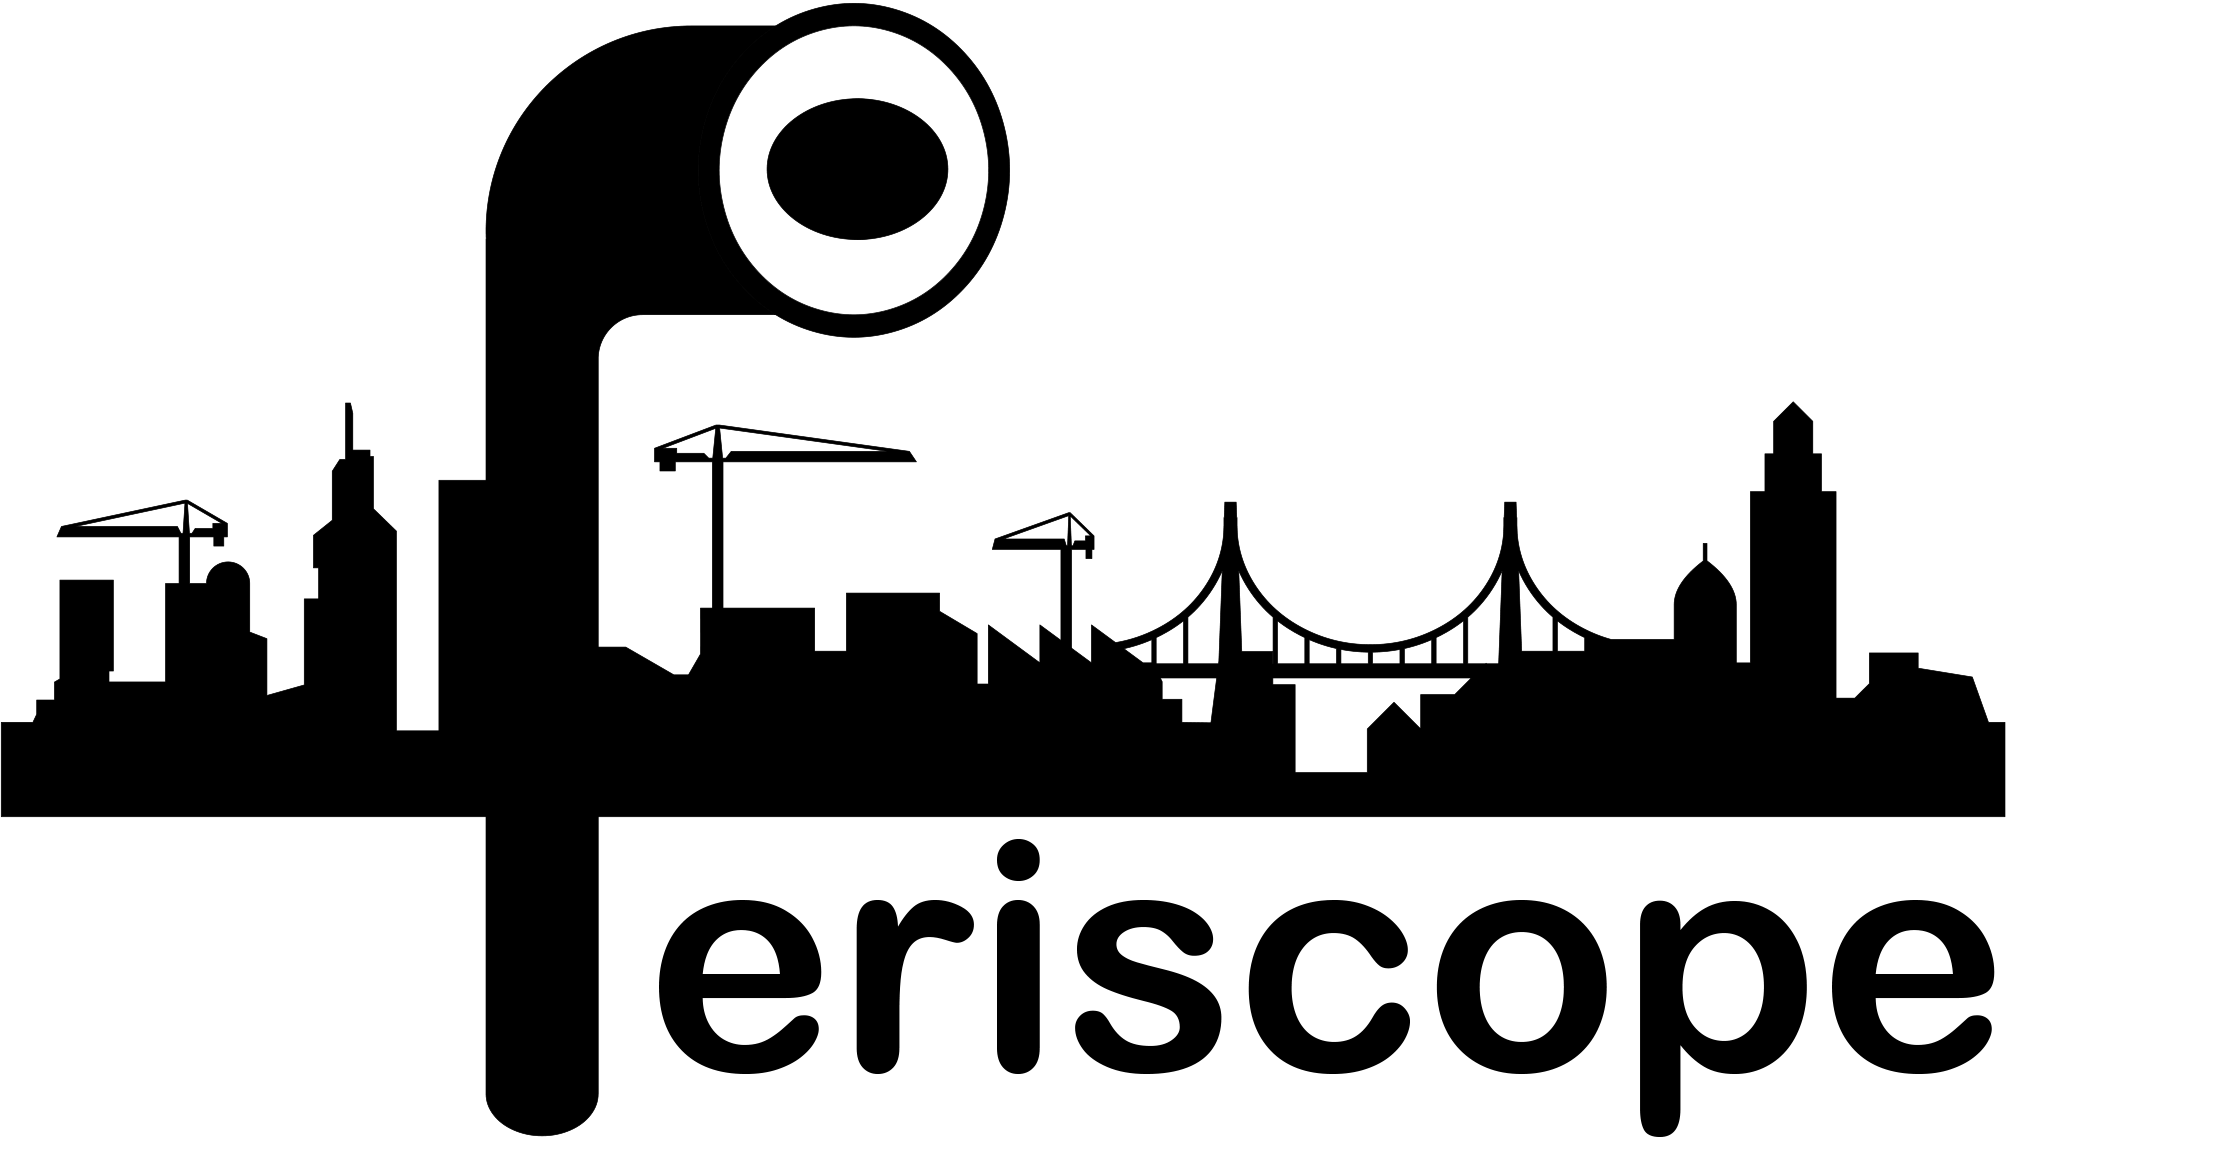 Logo Periscope